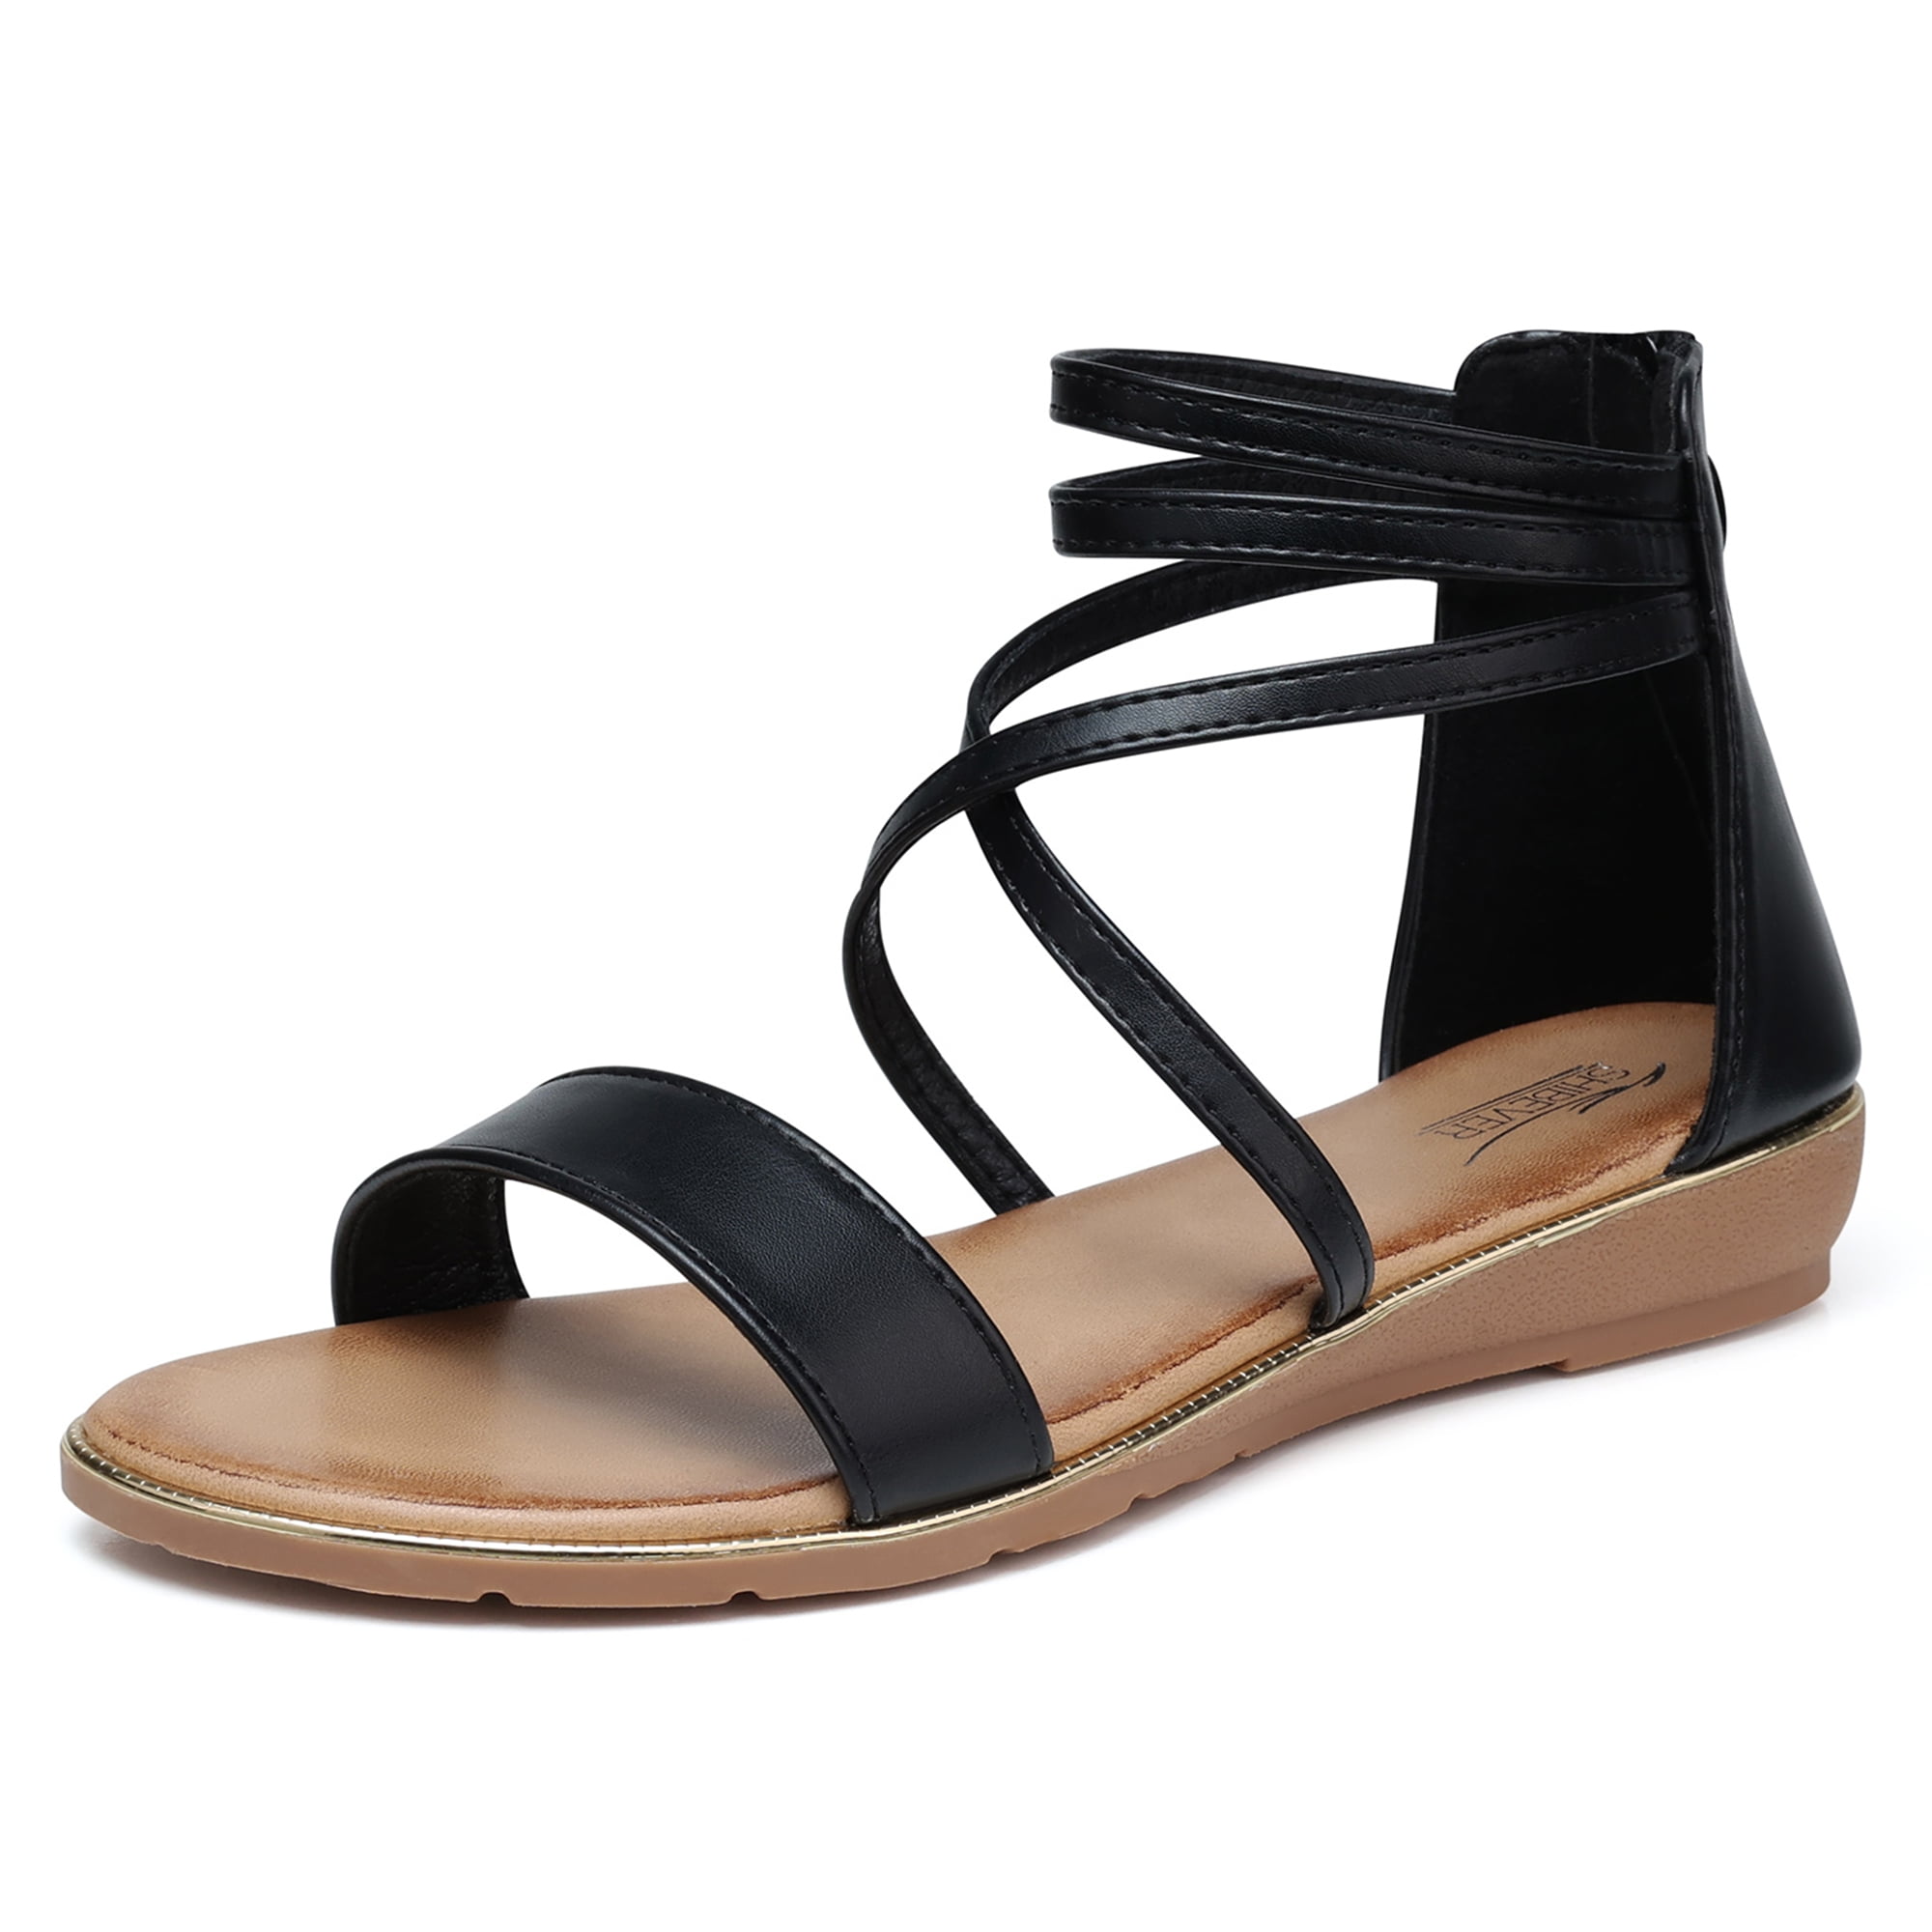 SHIBEVER Gladiator Sandals For Women Dressy Low Wedge Sandals Open Toe ...